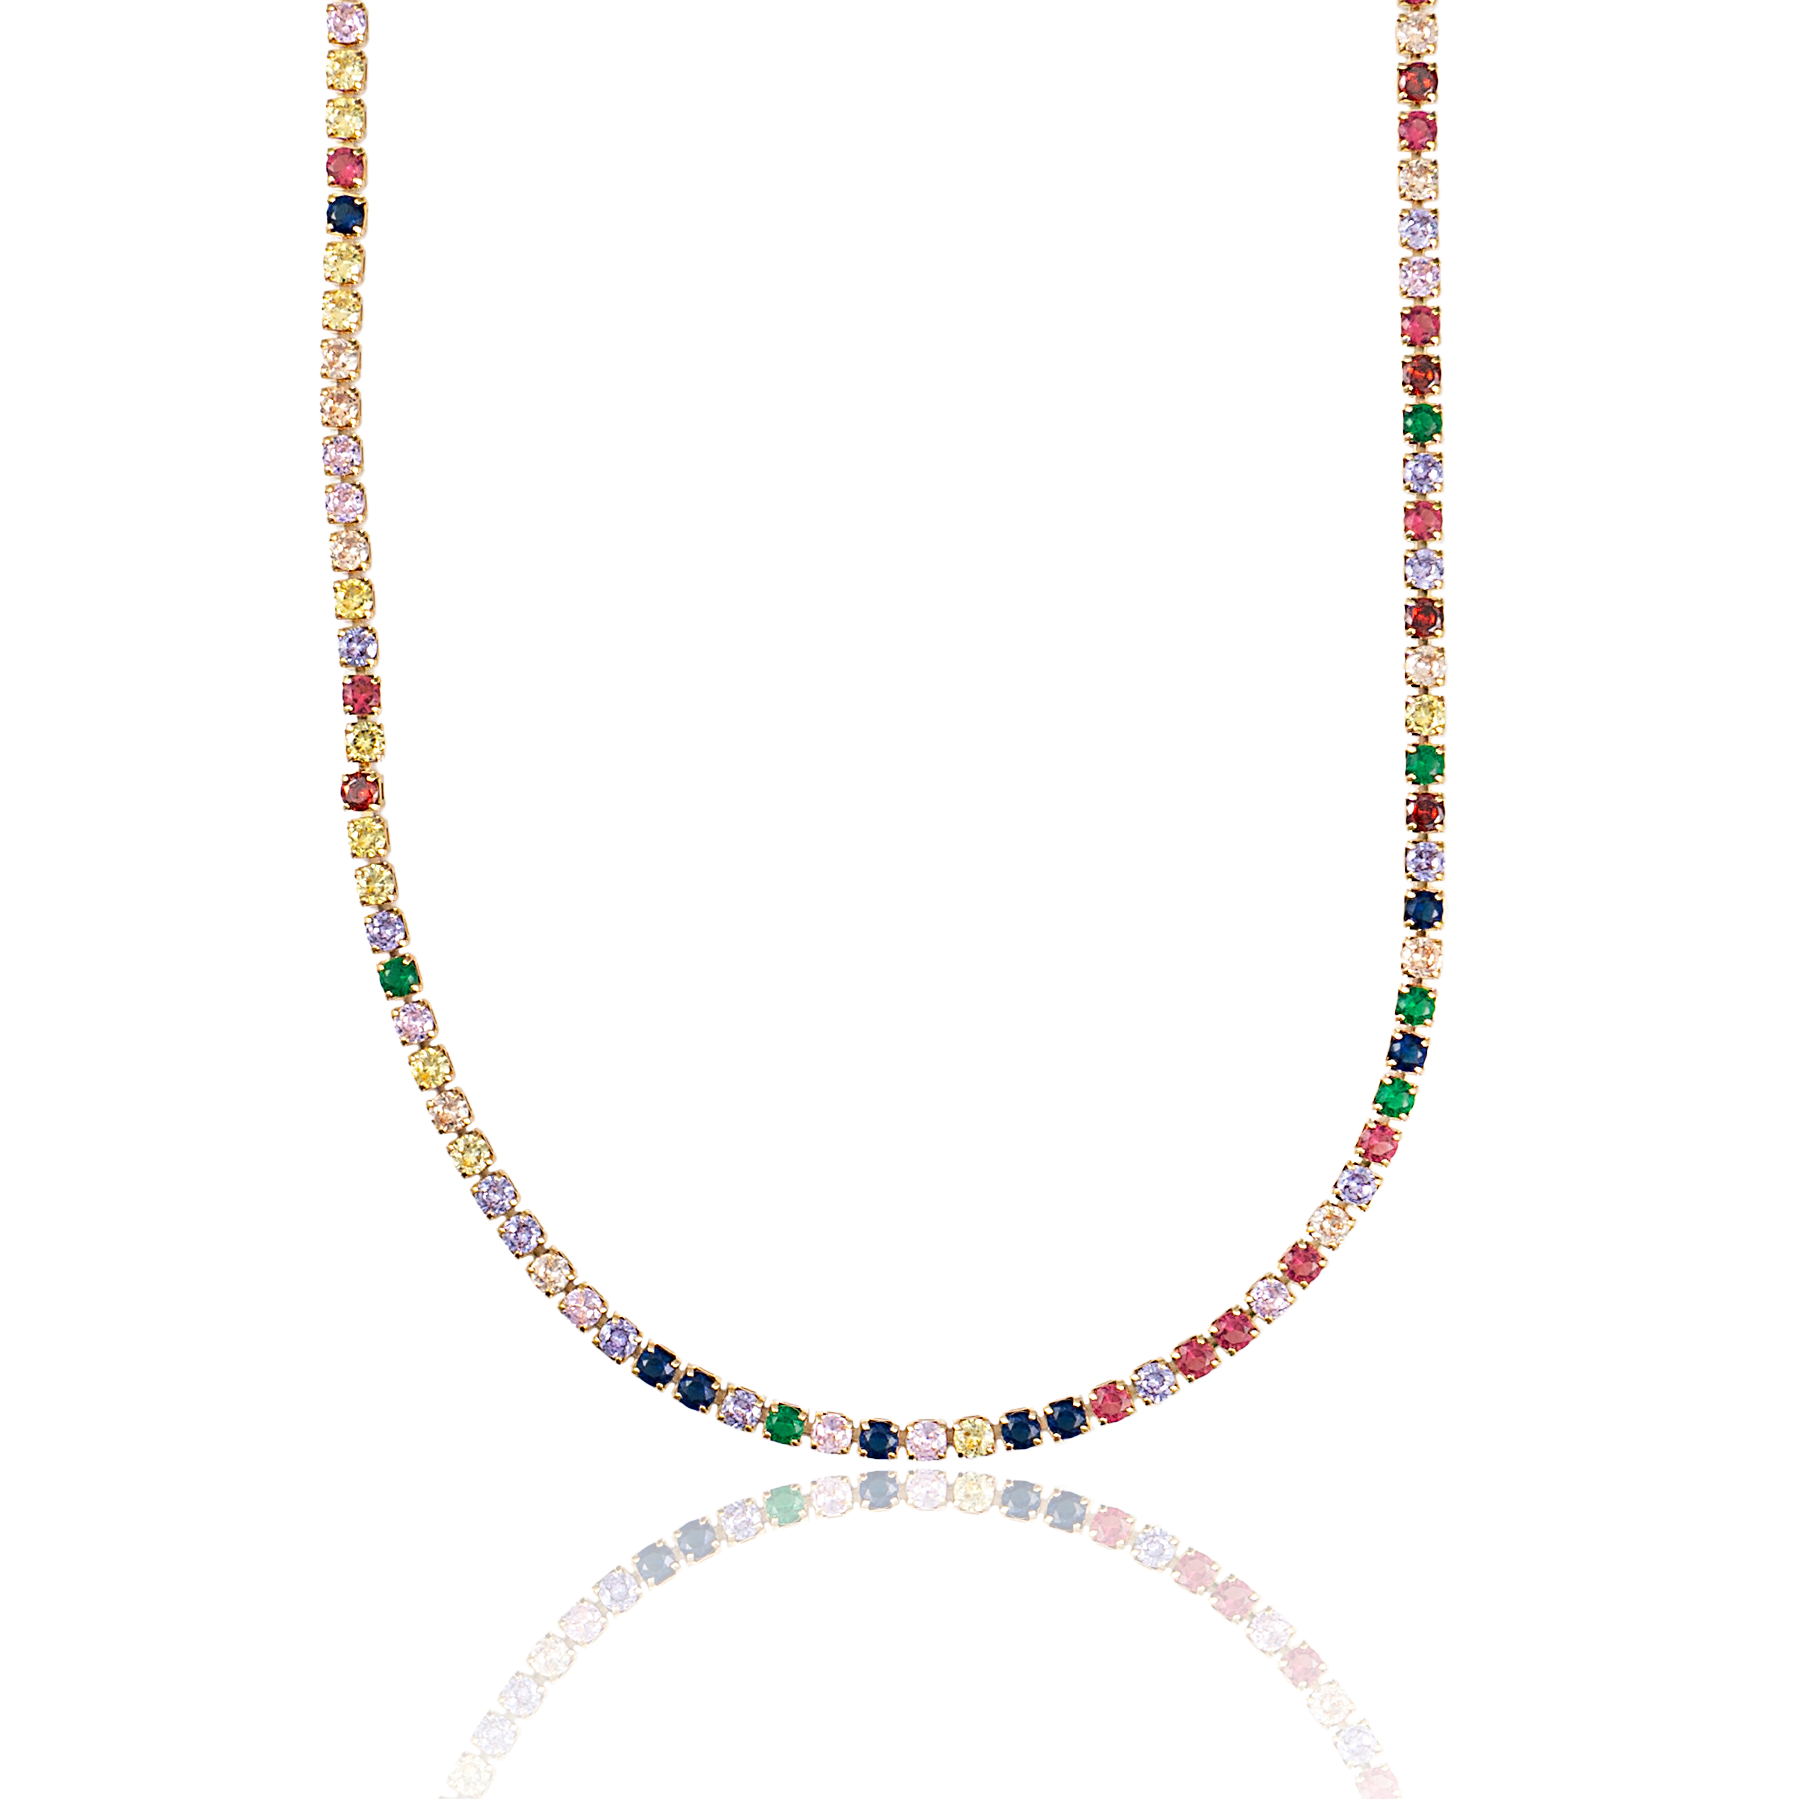 Multicolor Tennis Bracelet Chain With Round CZ Cubic Zirconia Stones